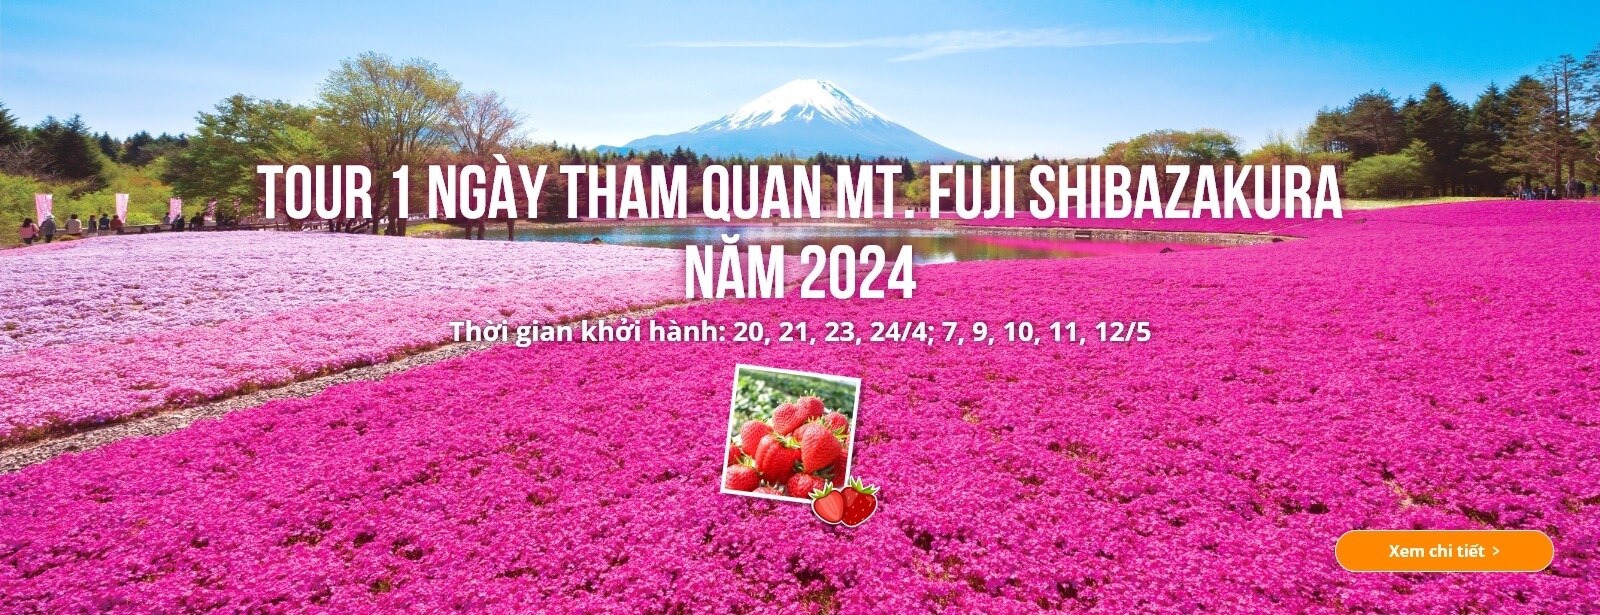 Tour 1 ngày tham quan Mt. Fuji Shibazakura năm 2024